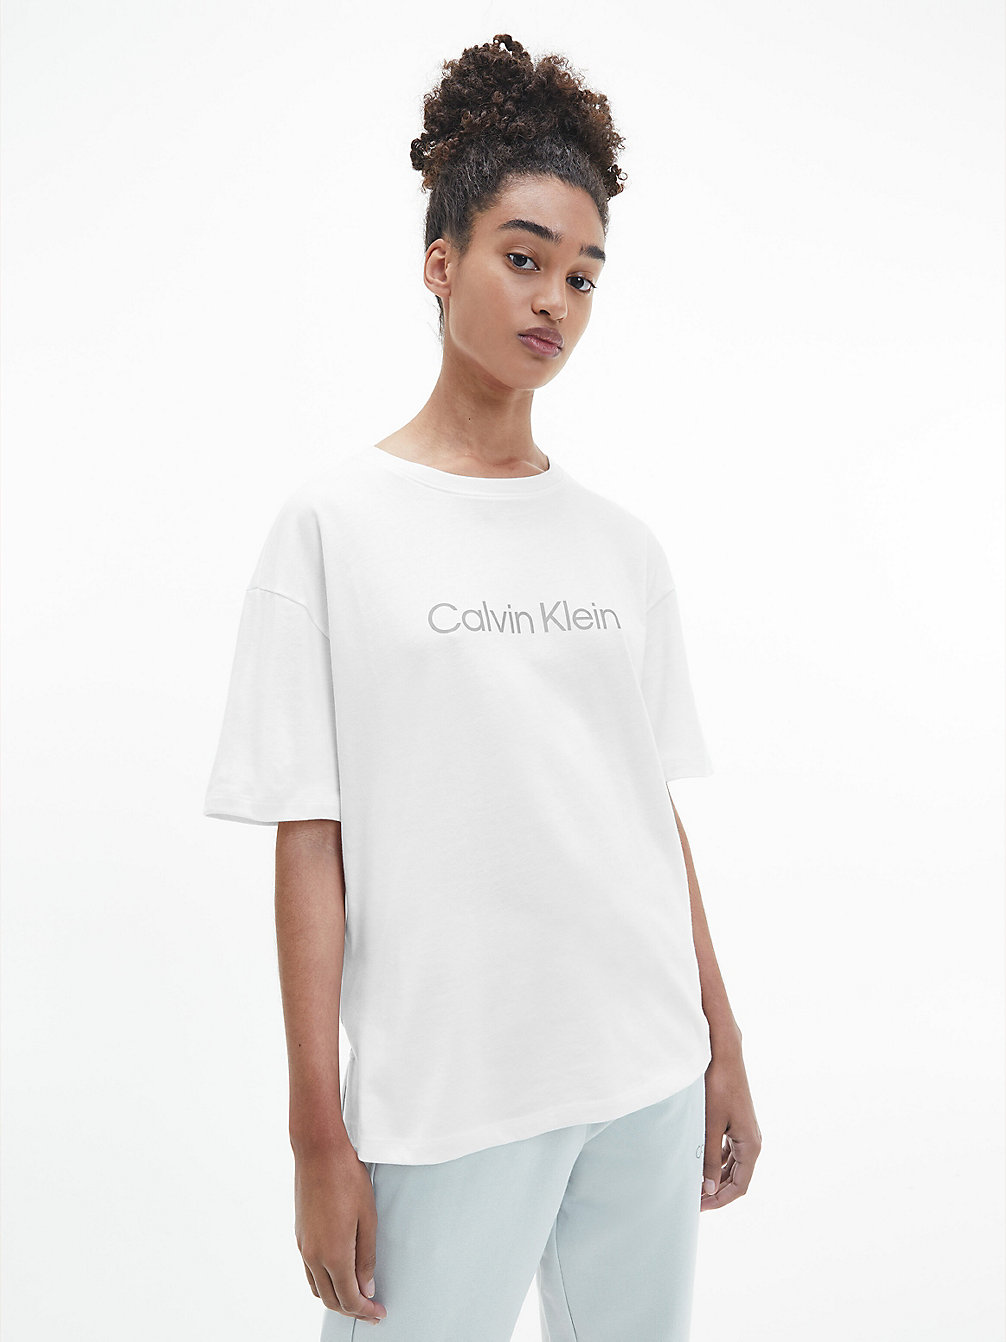 BRIGHT WHITE > Спортивная футболка бойфренд > undefined Женщины - Calvin Klein